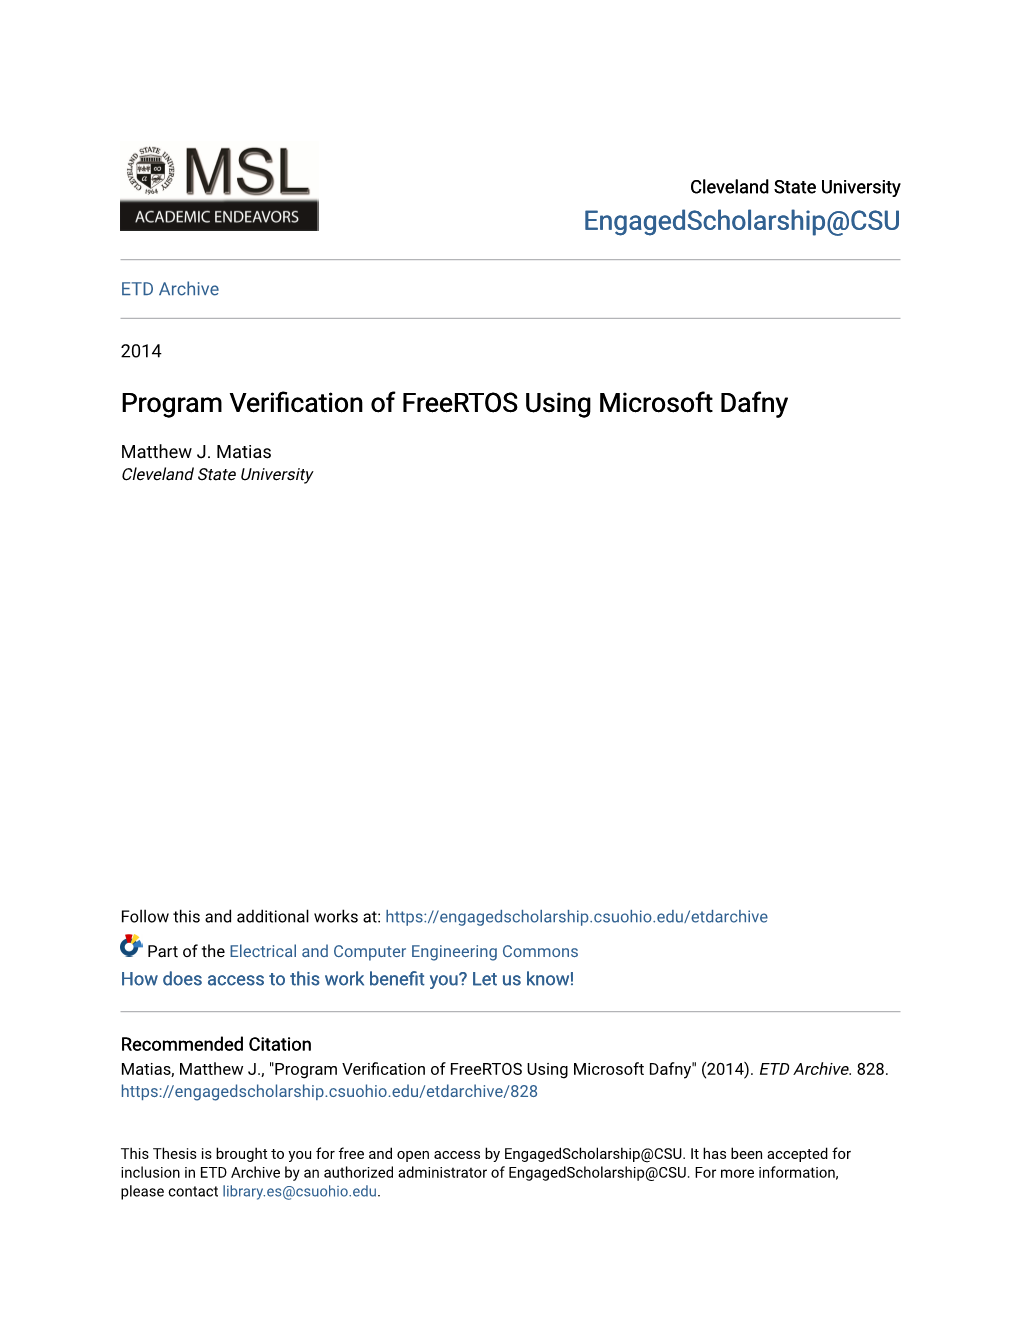 Program Verification of Freertos Using Microsoft Dafny